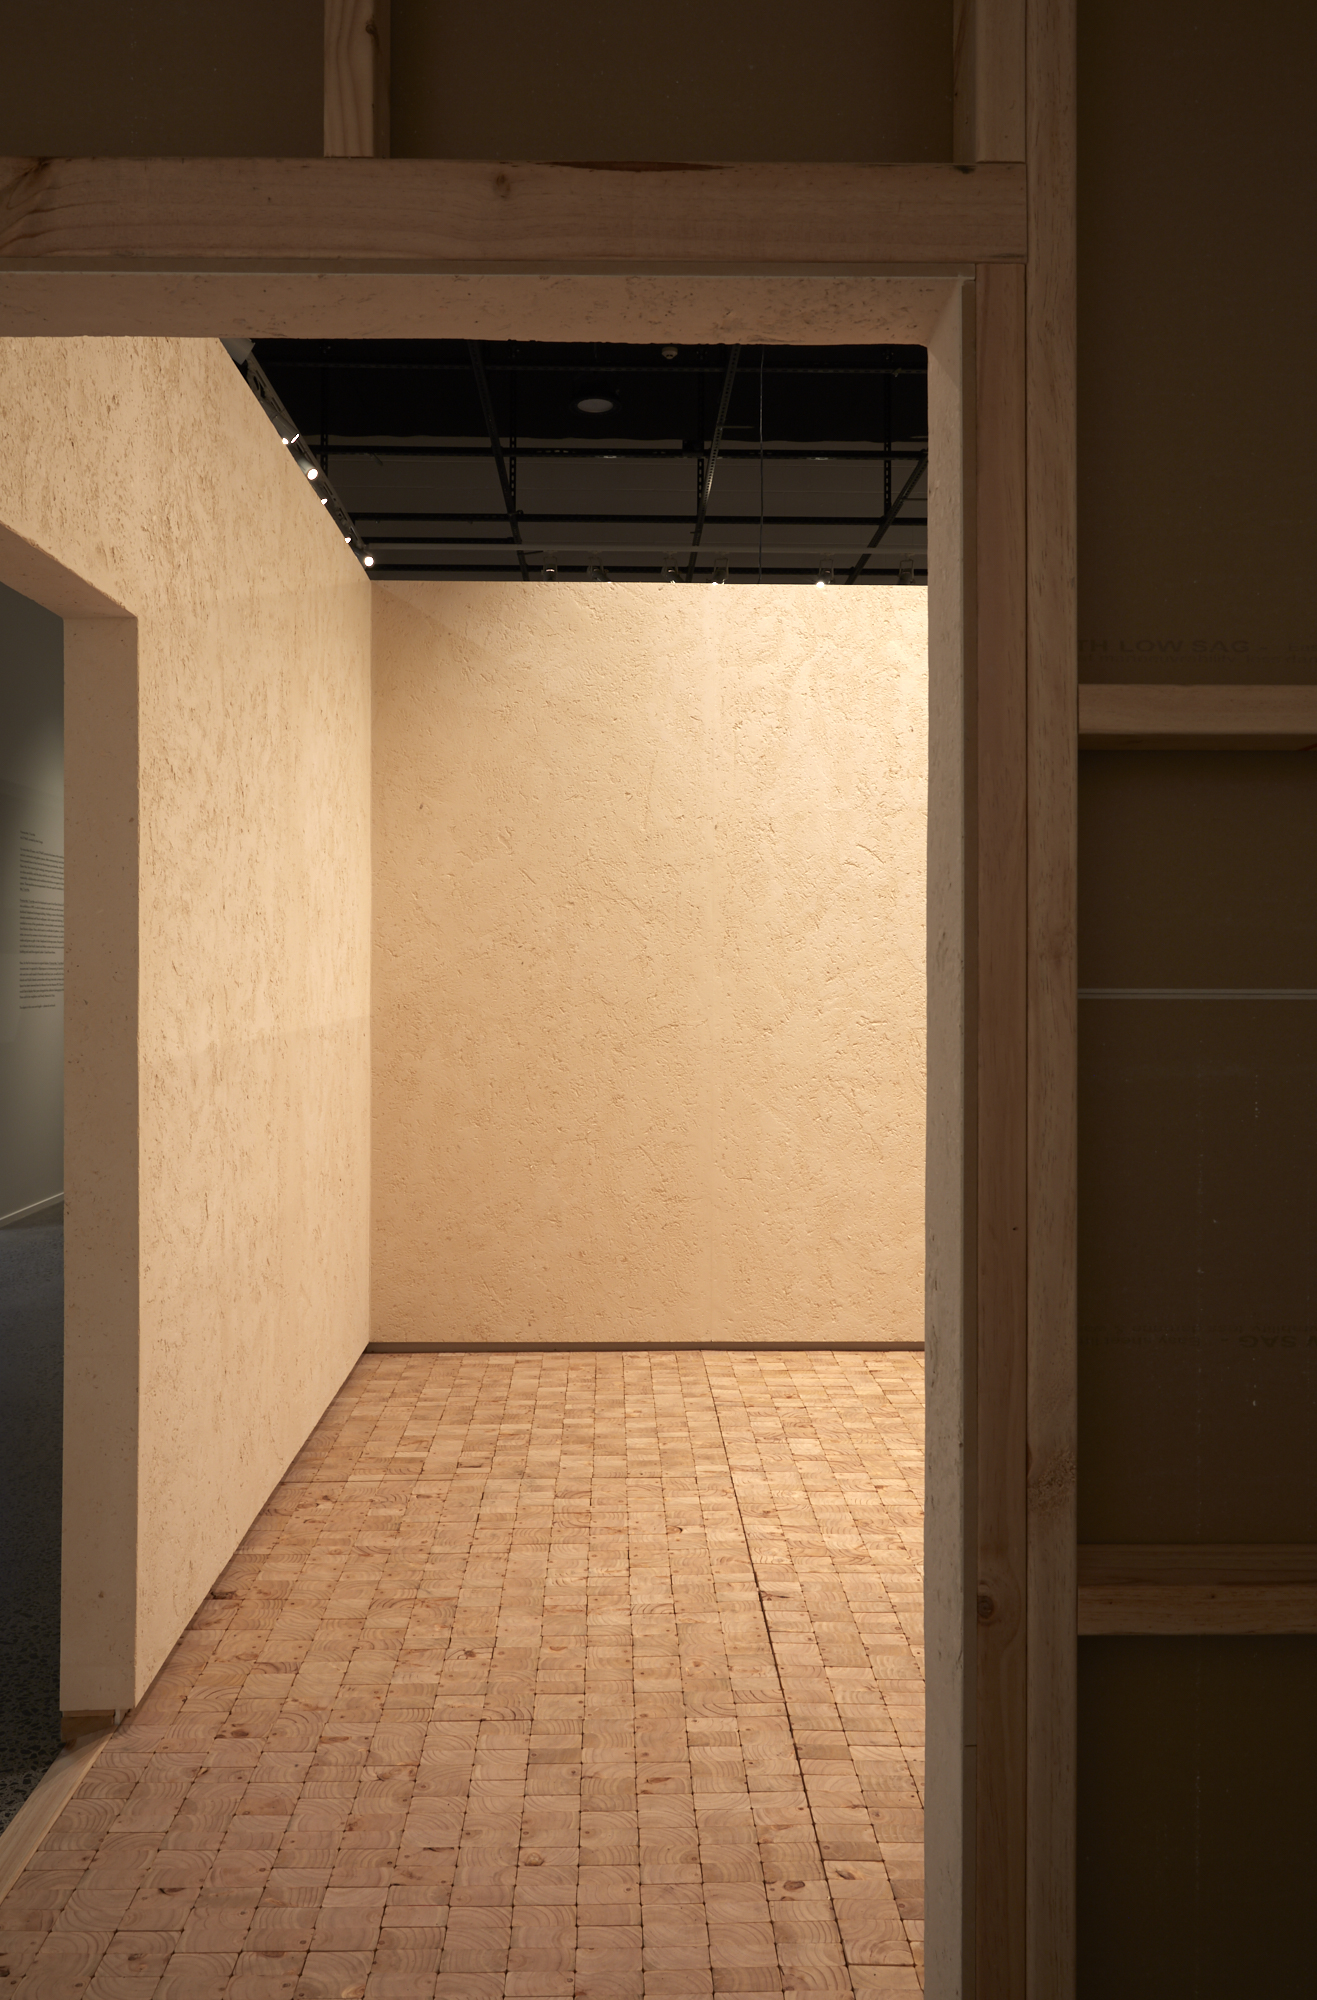 Rufus Knight and Mijntje Lepoutre, Untitled (Presque Rien), The Room, 2019, Objectspace. Image: Samuel Hartnett